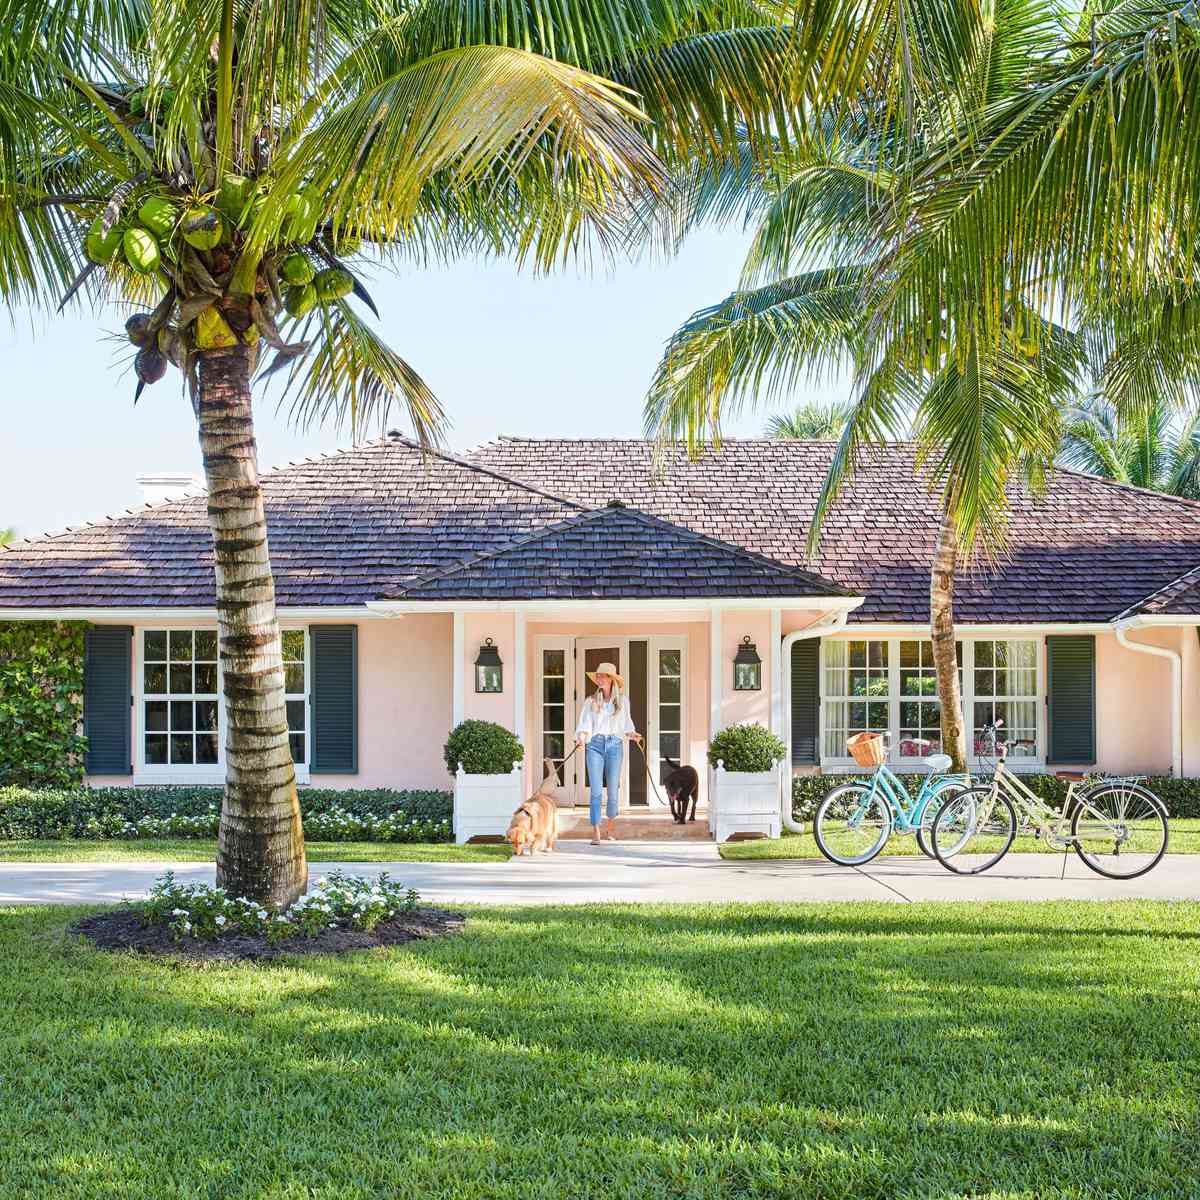 Ellen Kavanaugh's Pink Ranch House in Florida